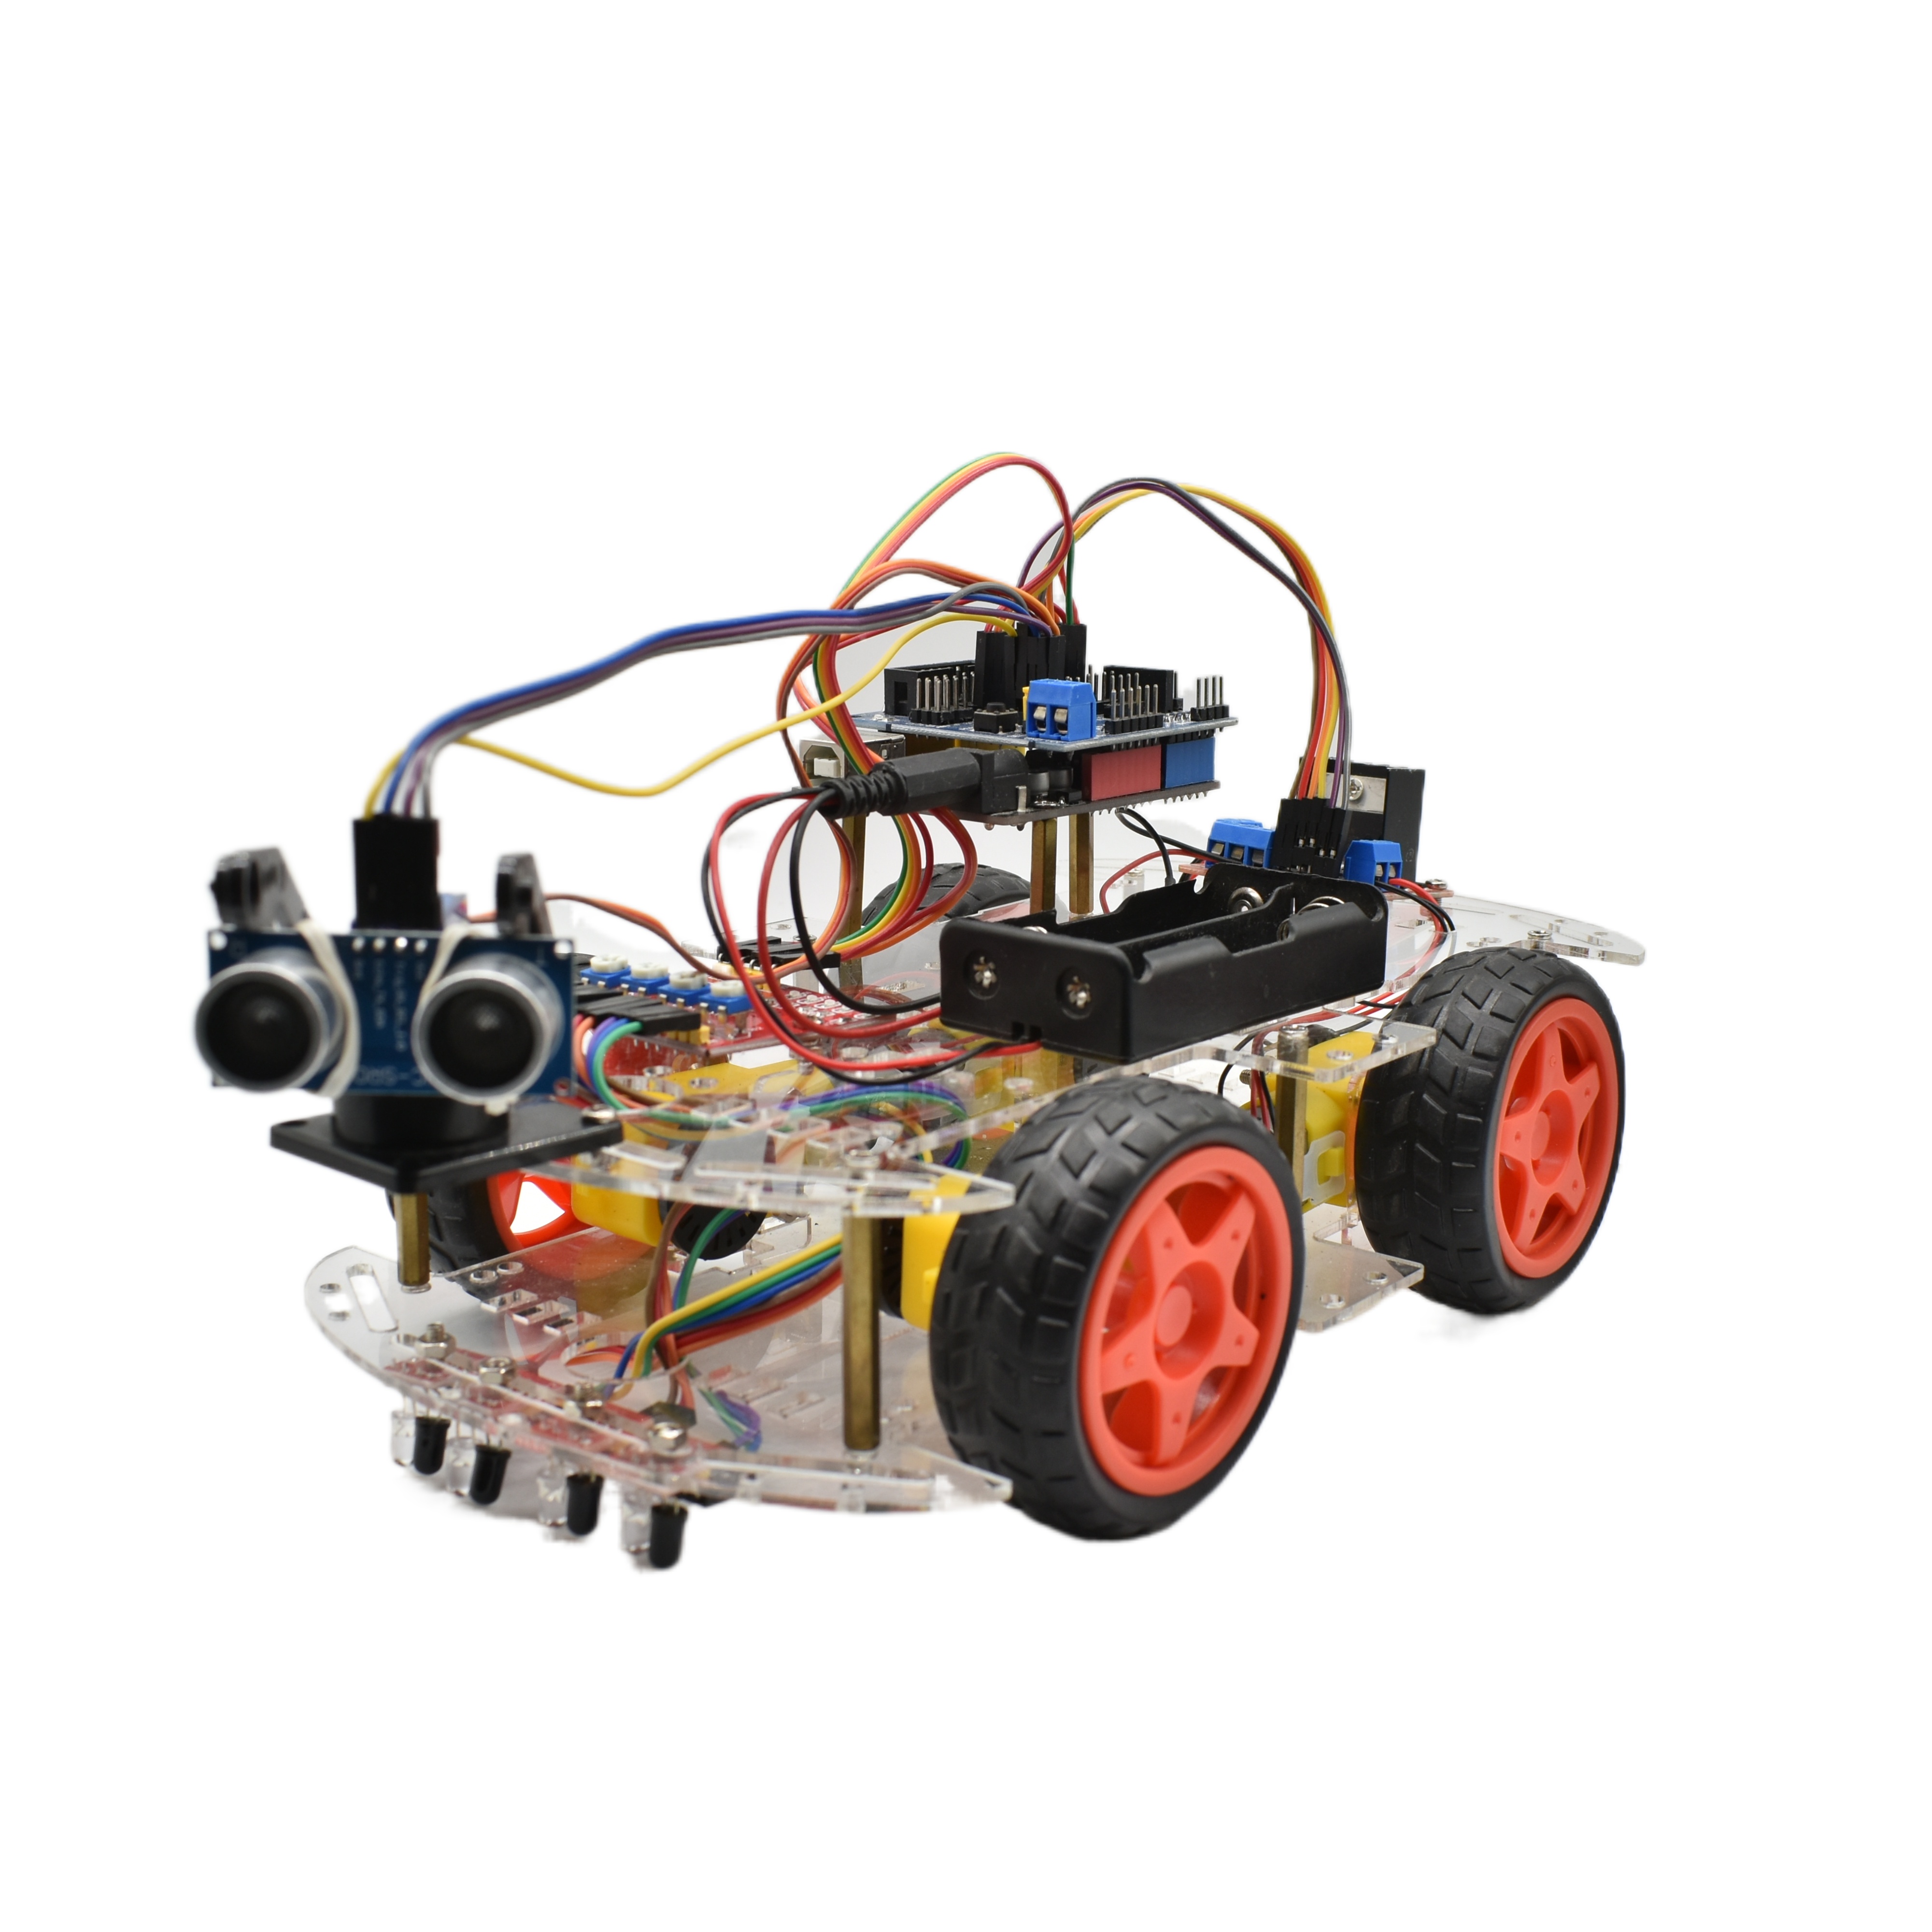 Mini 2wd Smart Robot Car Kit Nano, Programmable, Obstacle Avoidance